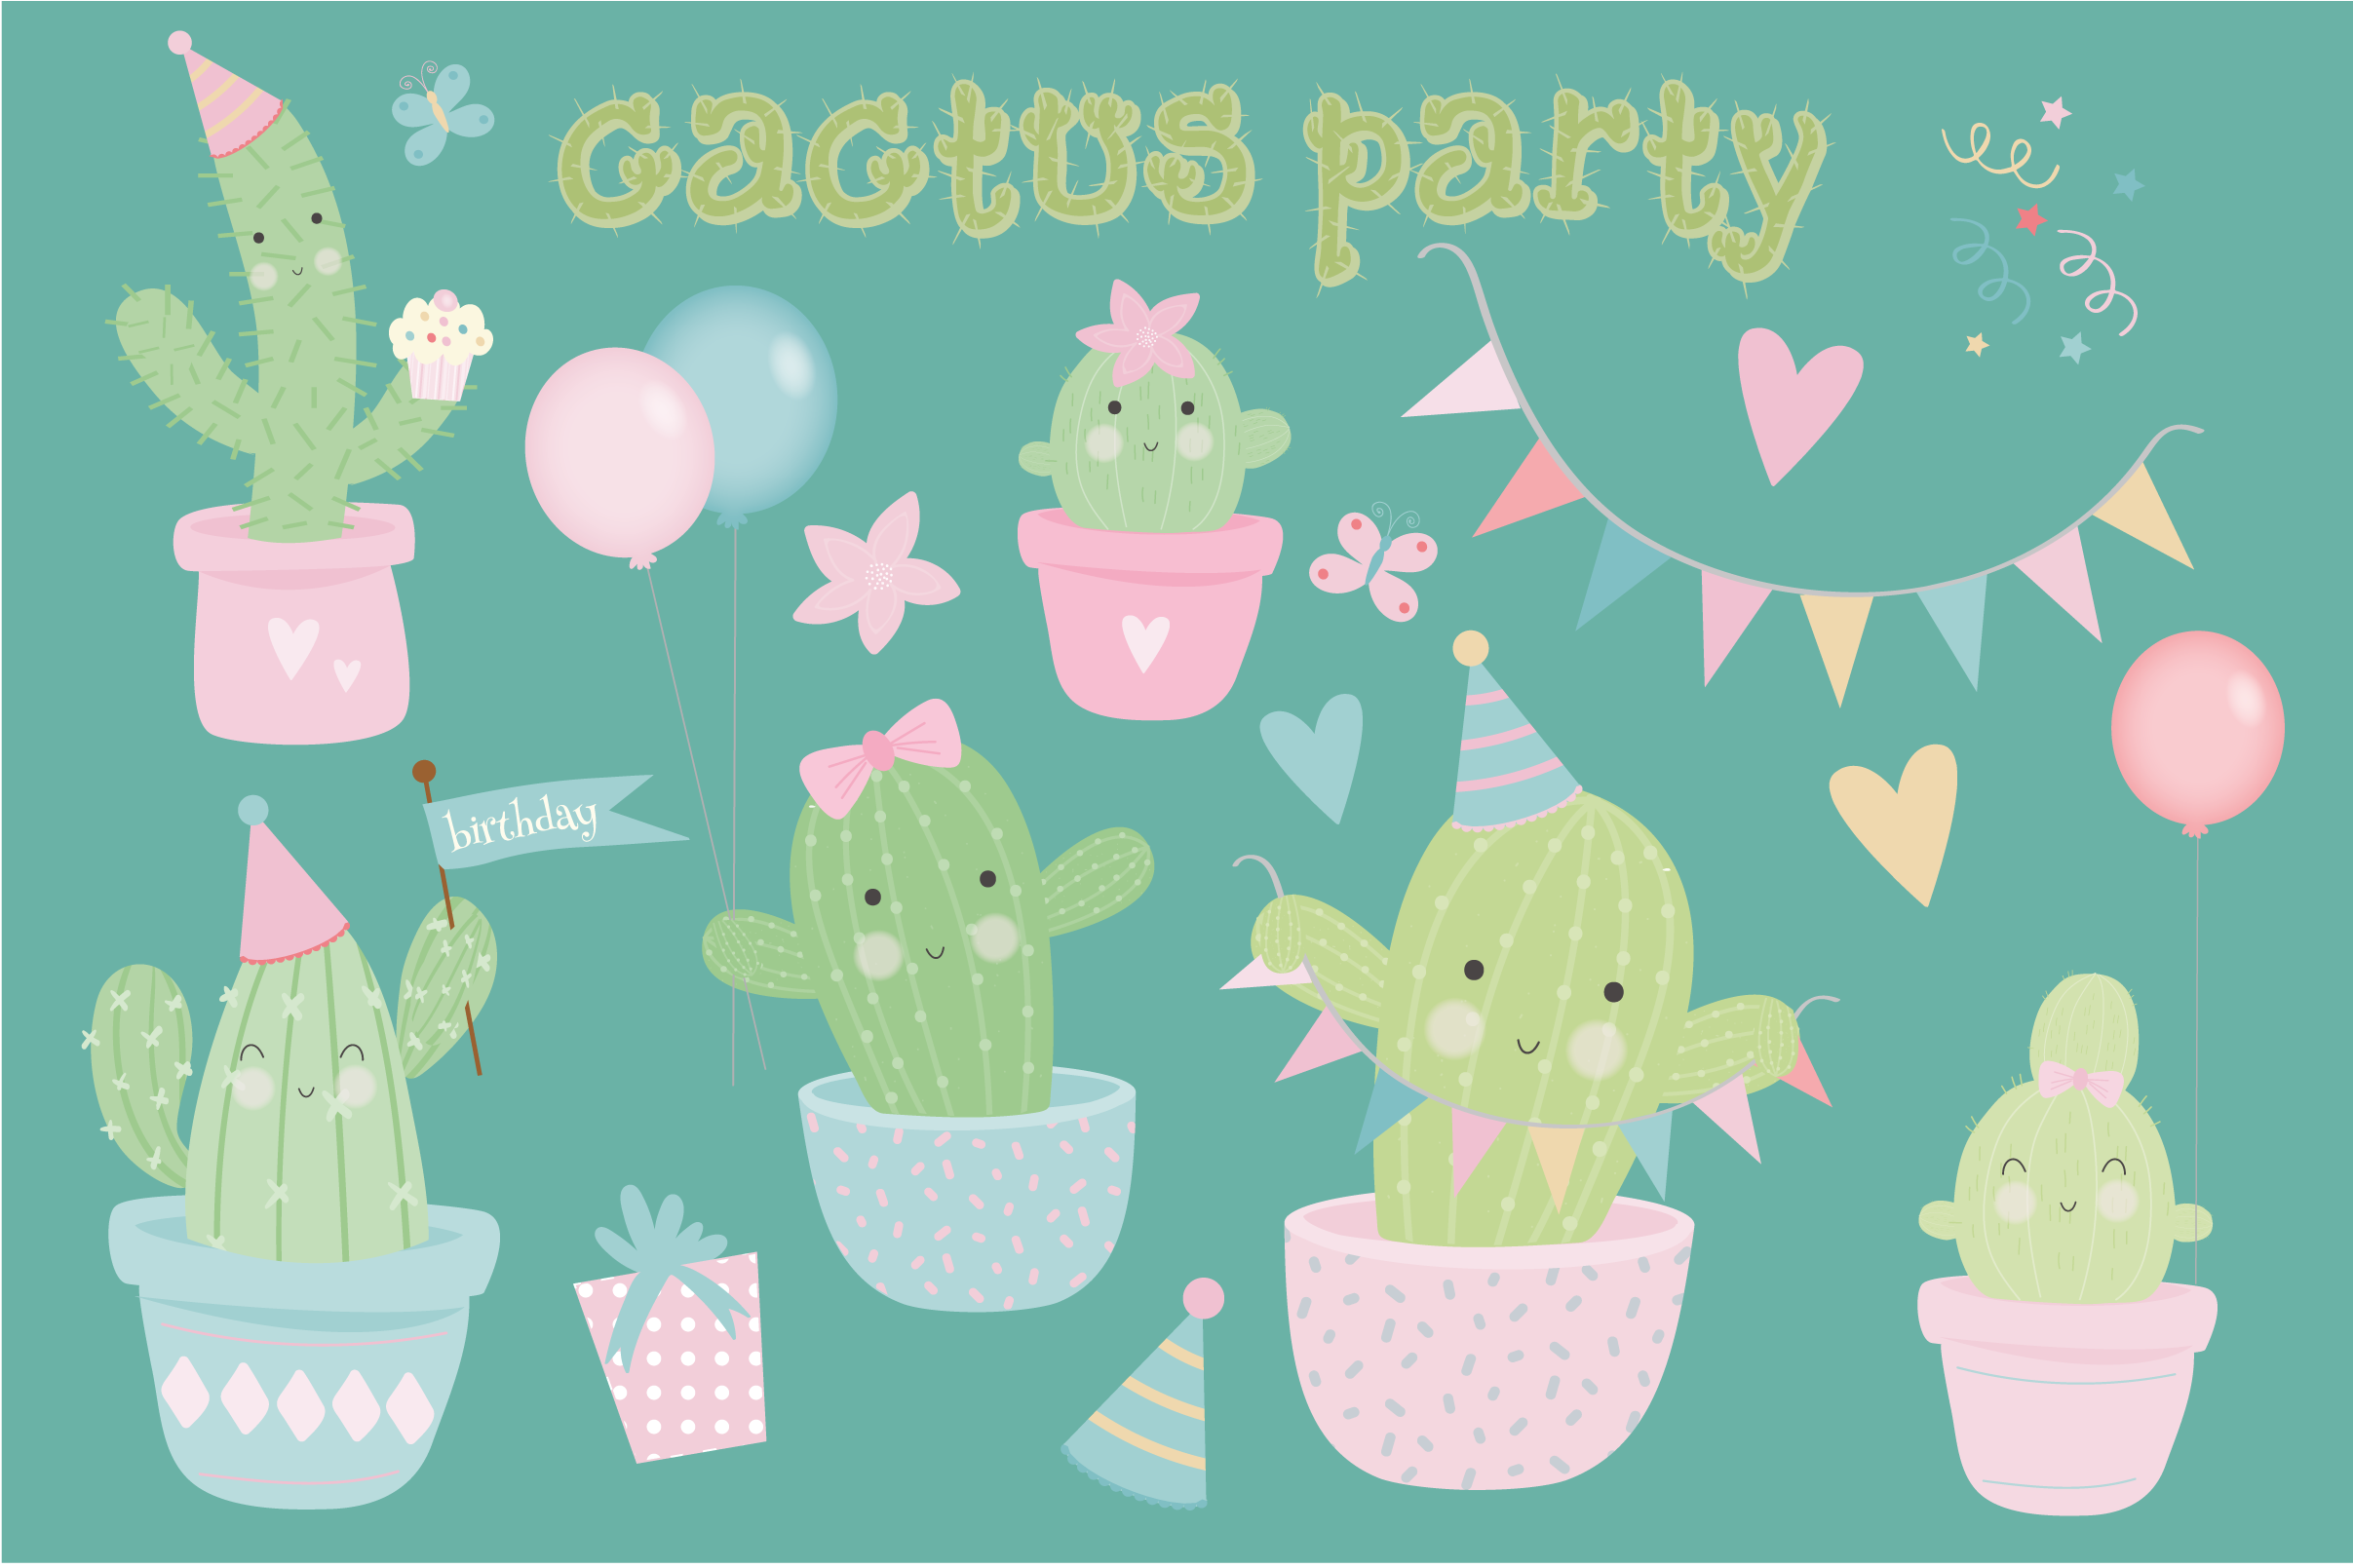 Cactus party clipart.